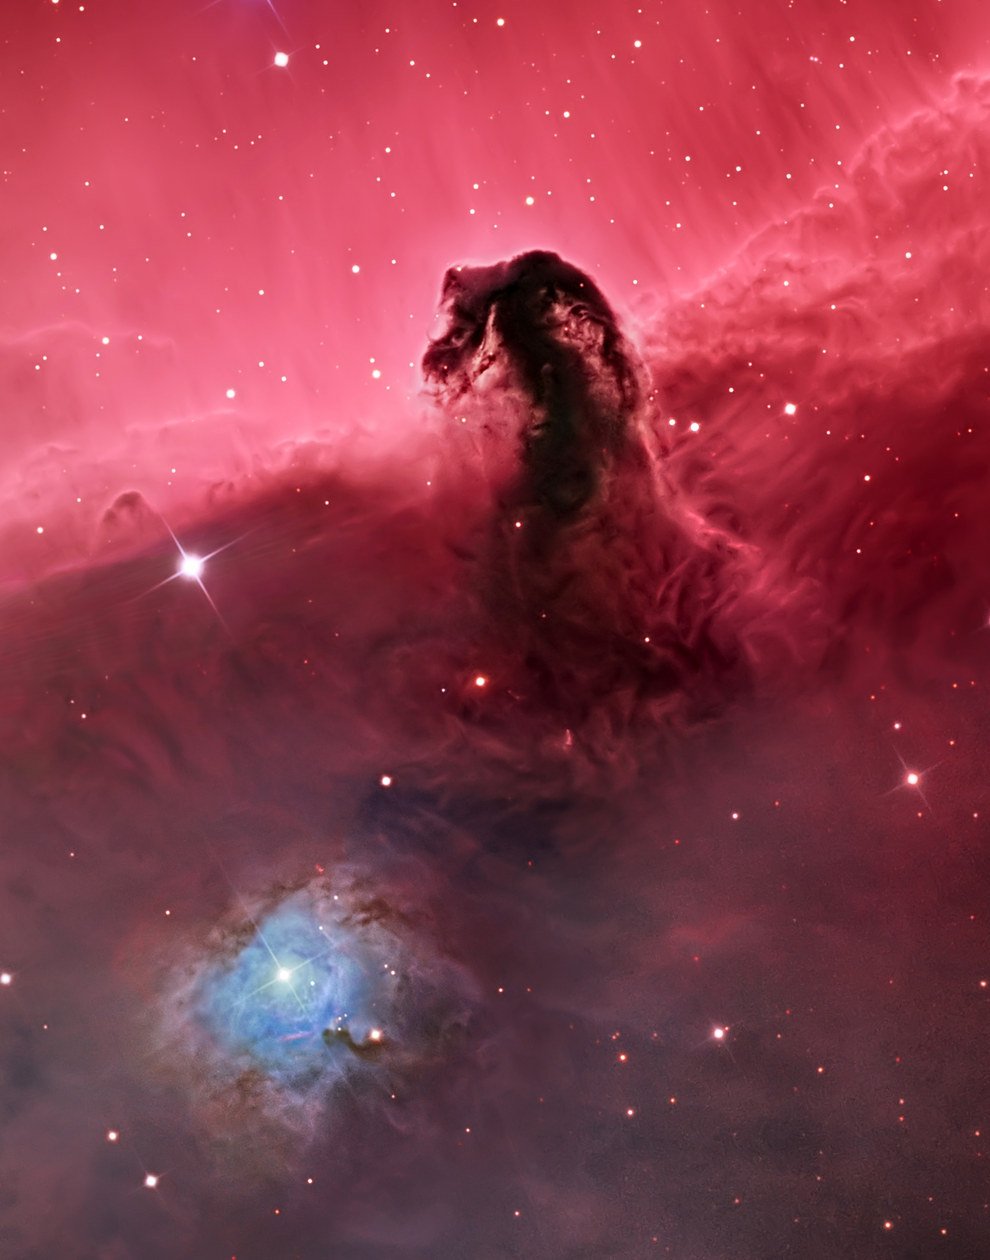 Winner, Deep Space – "Horsehead Nebula (IC 434)" by Bill Snyder